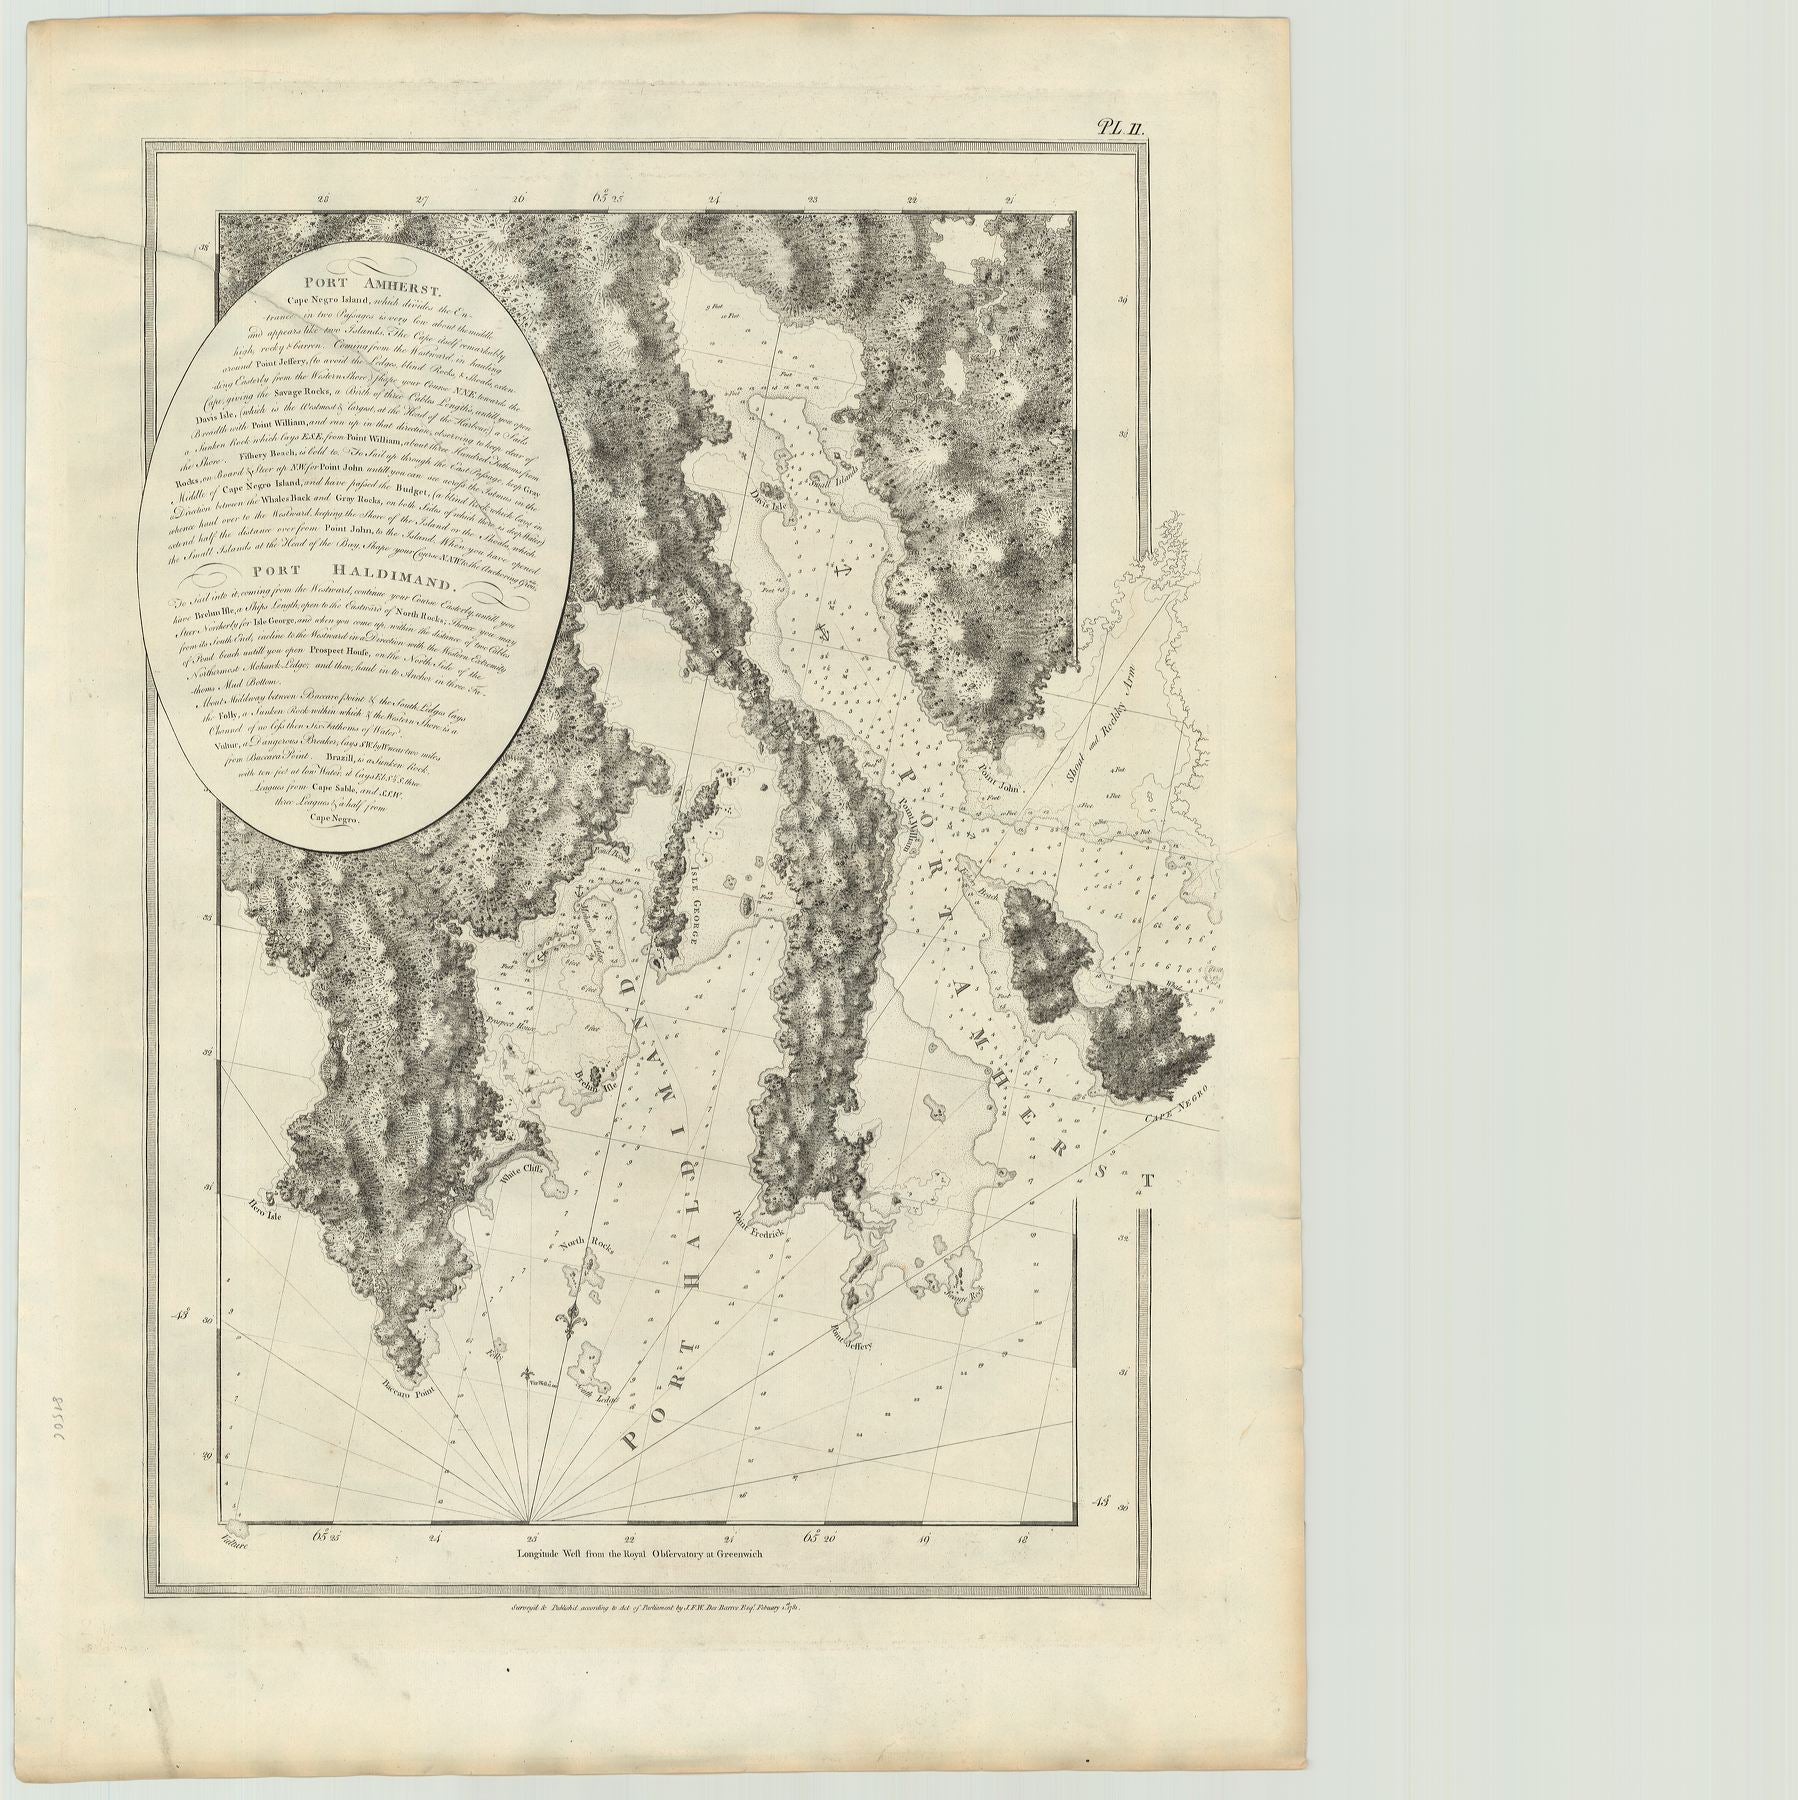 R2574  DesBarres, J.F.W.: Port Amherst … Port Haldimand. 1781